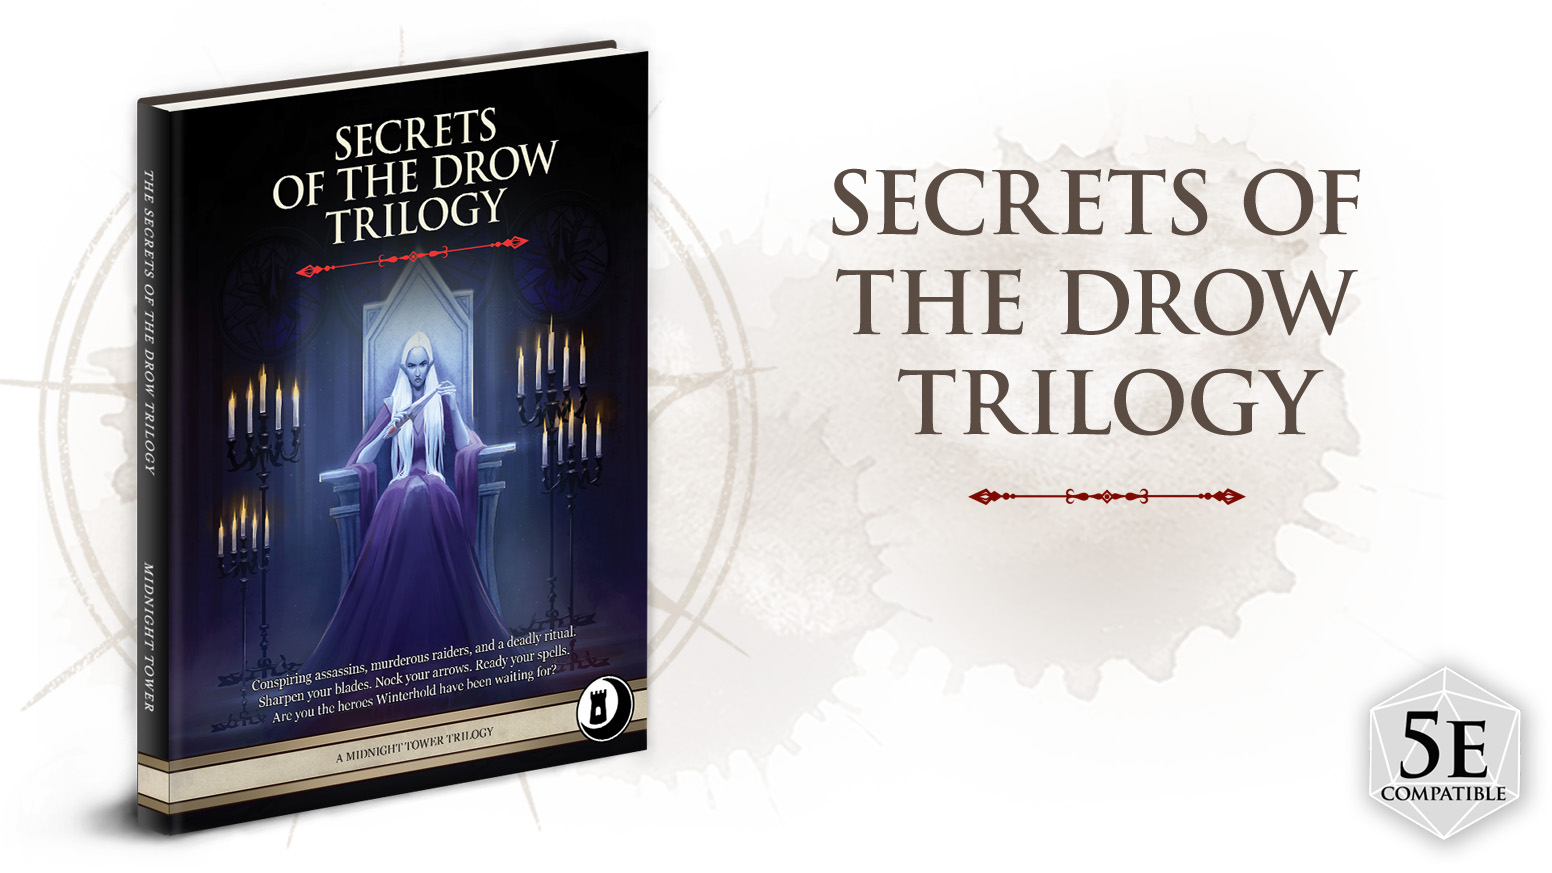 Secrets-of-the-Drow-Trilogy-main-image.jpg